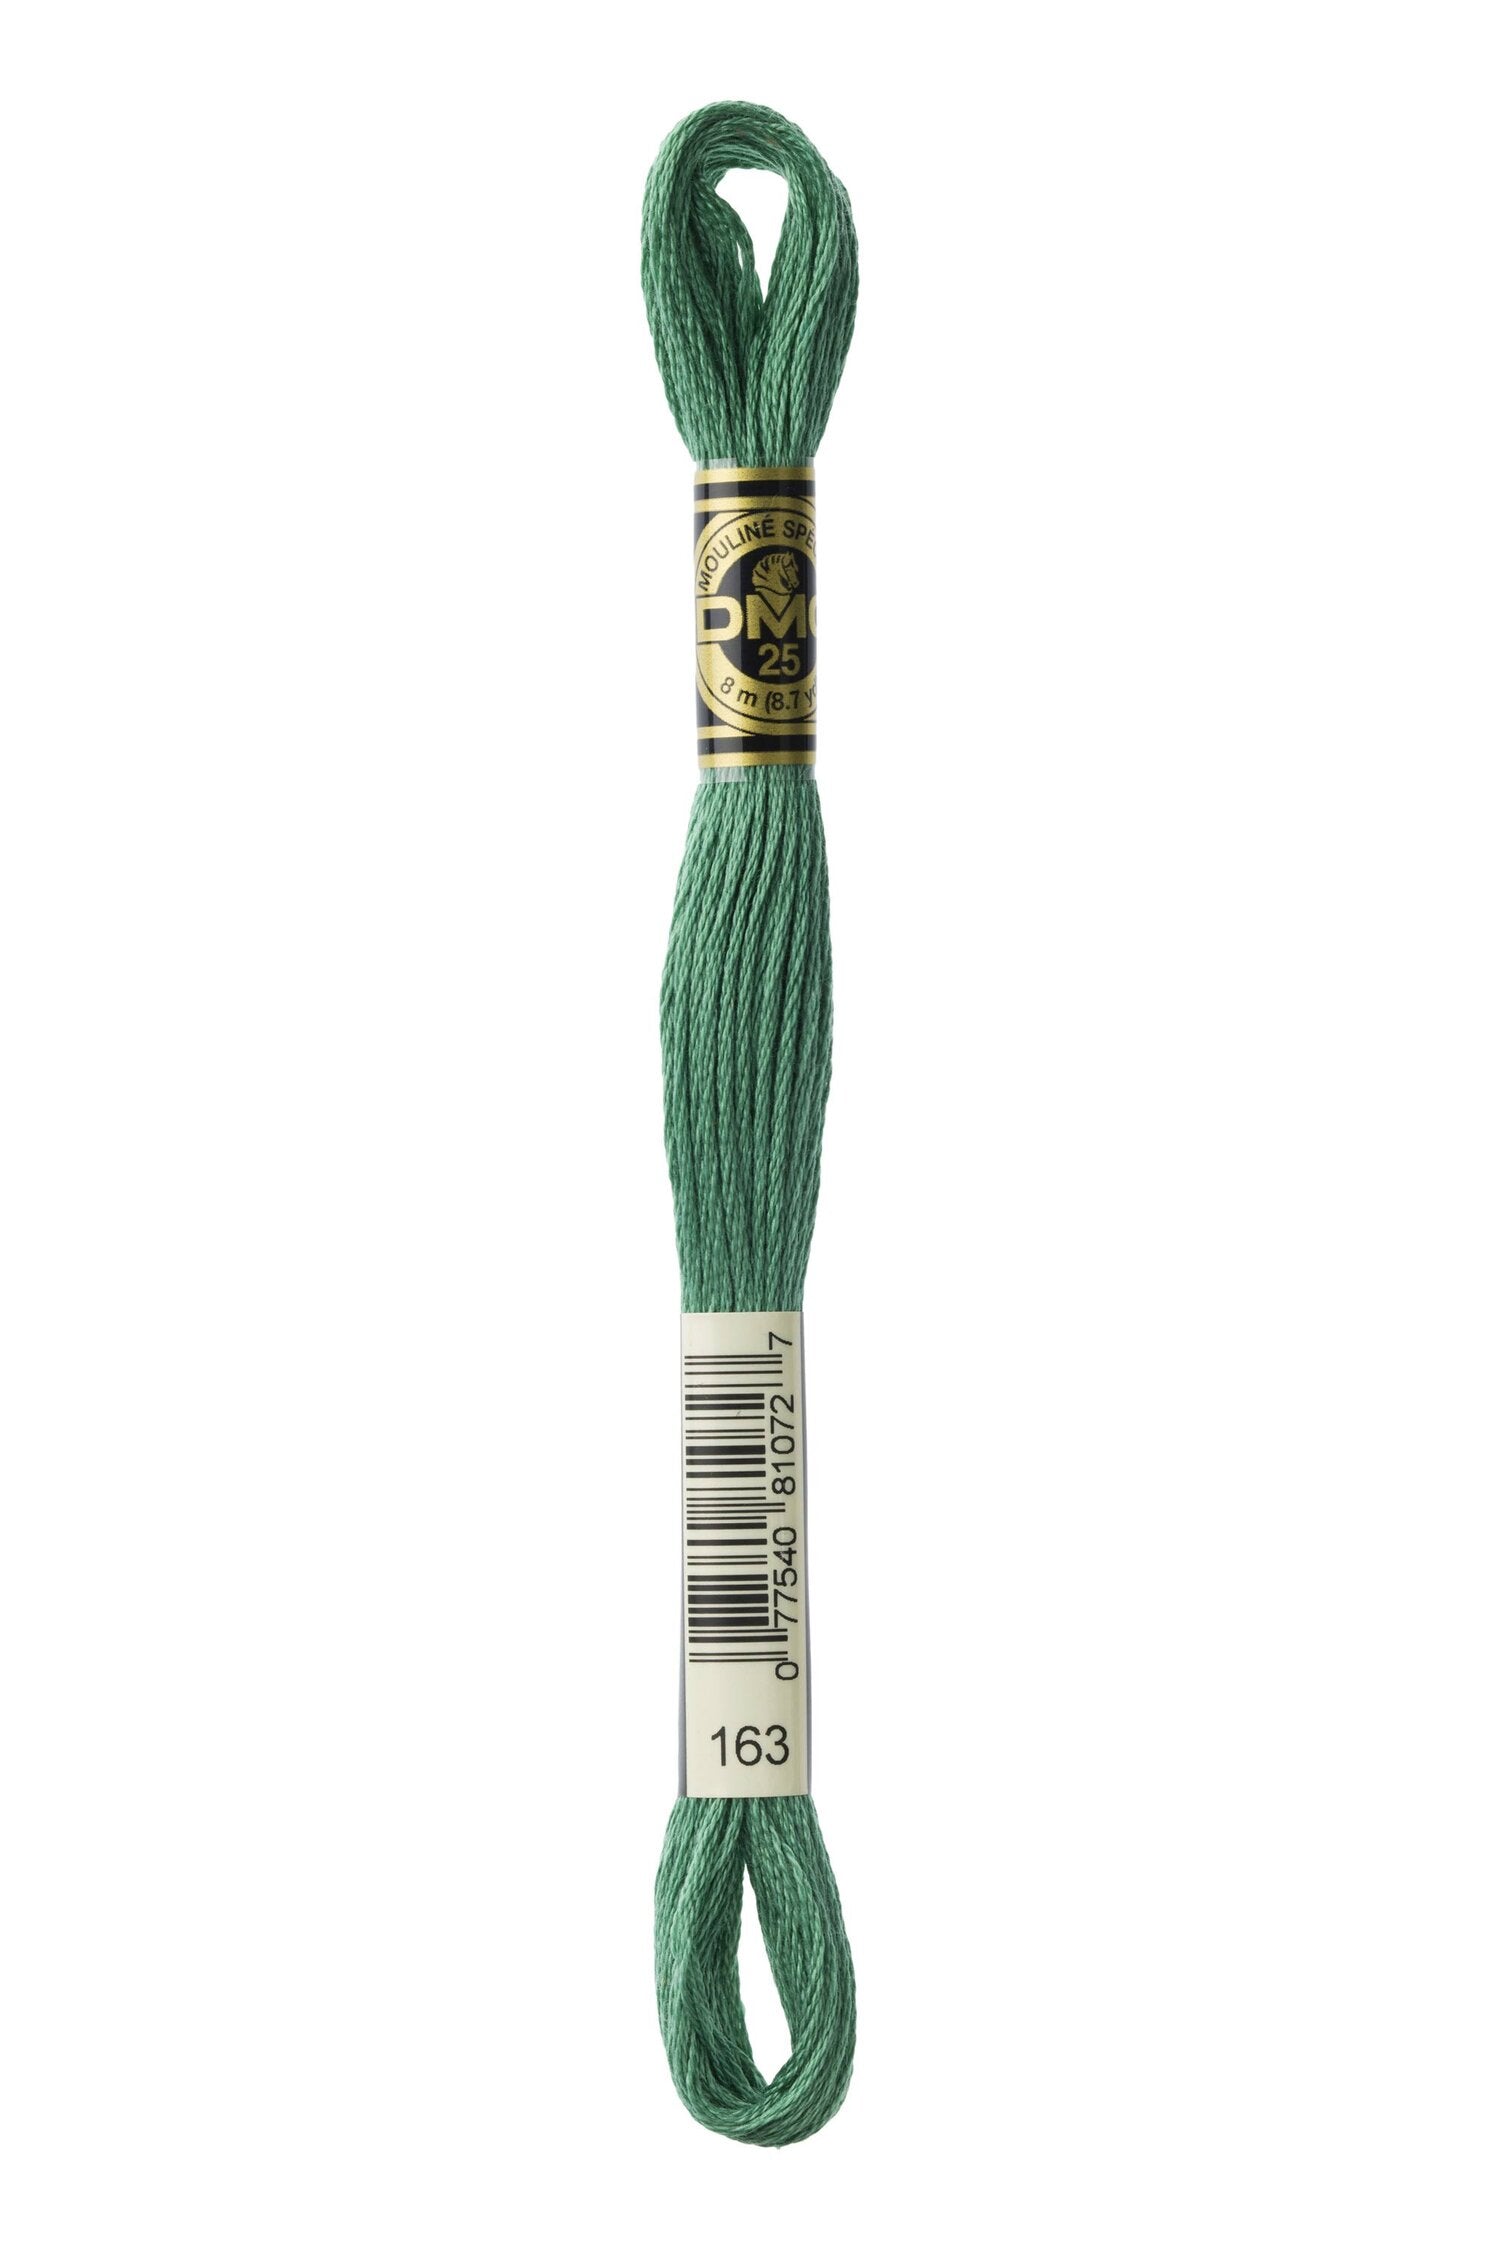 DMC 163 - Green - DMC 6 Strand Embroidery Thread, Thread & Floss, Thread & Floss, The Crafty Grimalkin - A Cross Stitch Store